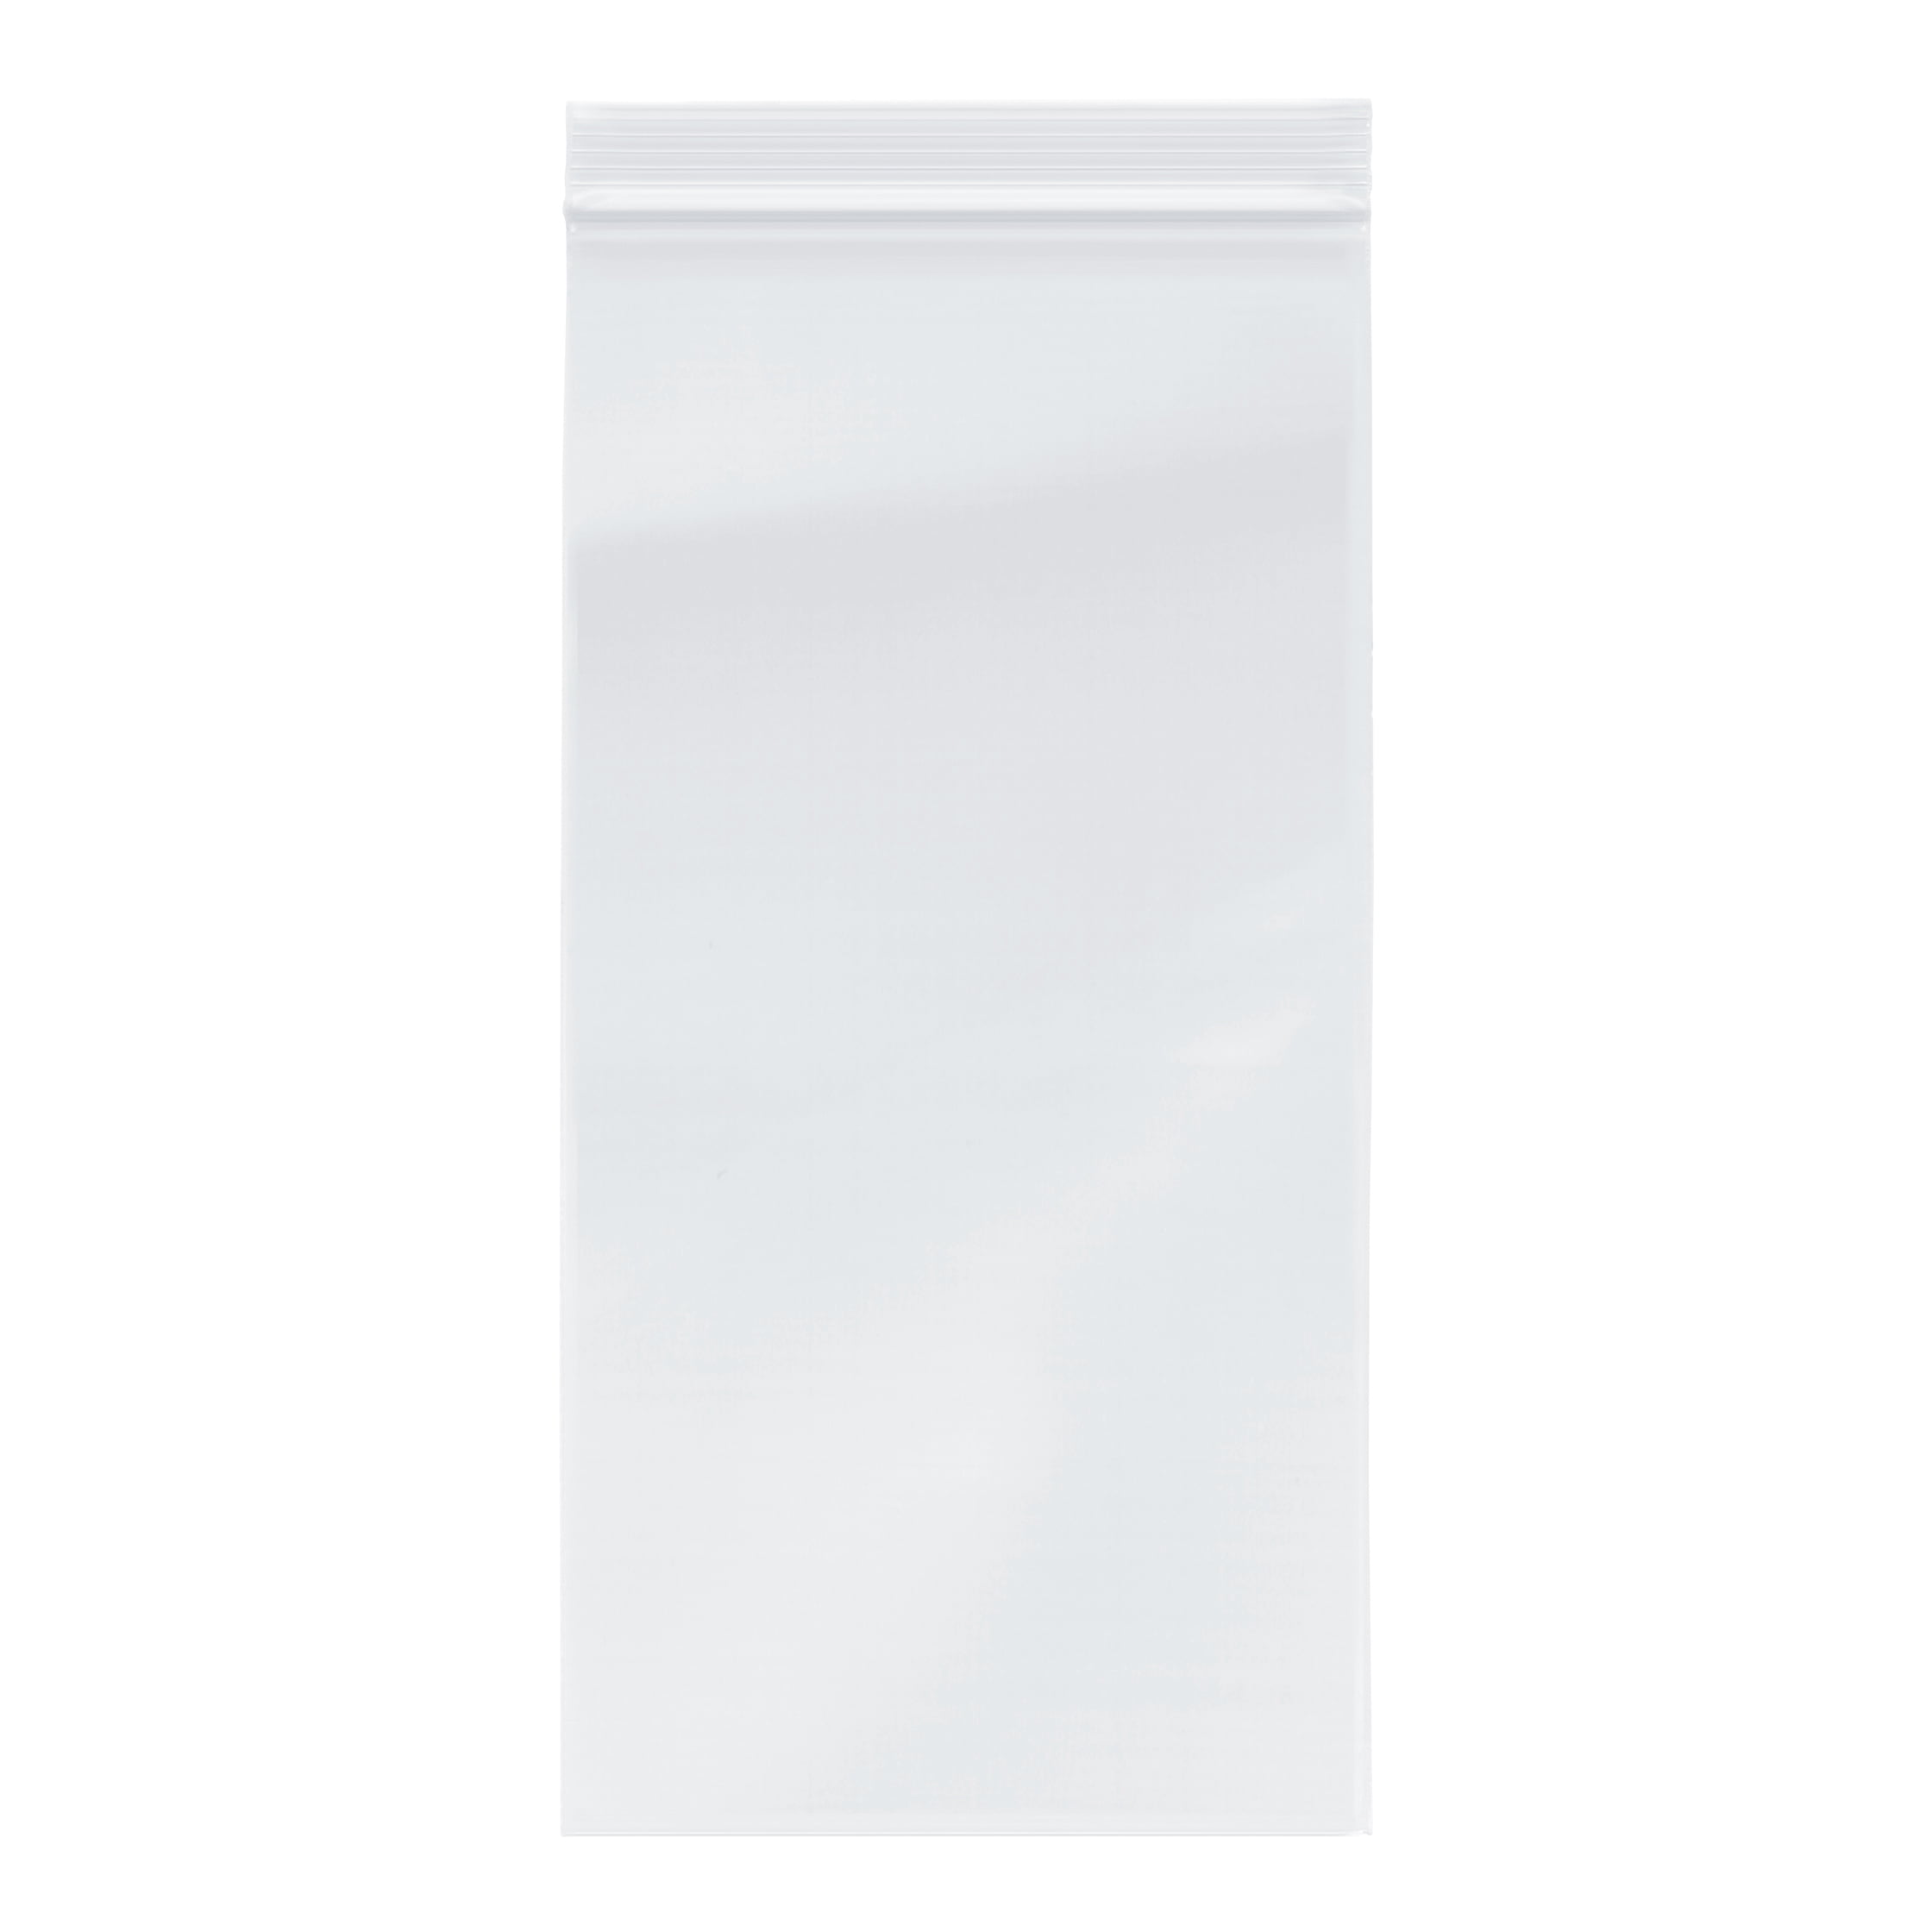 Zipper Reclosable Plastic Bags 2 Mil Plymor 4 x 7 Pack of 100 